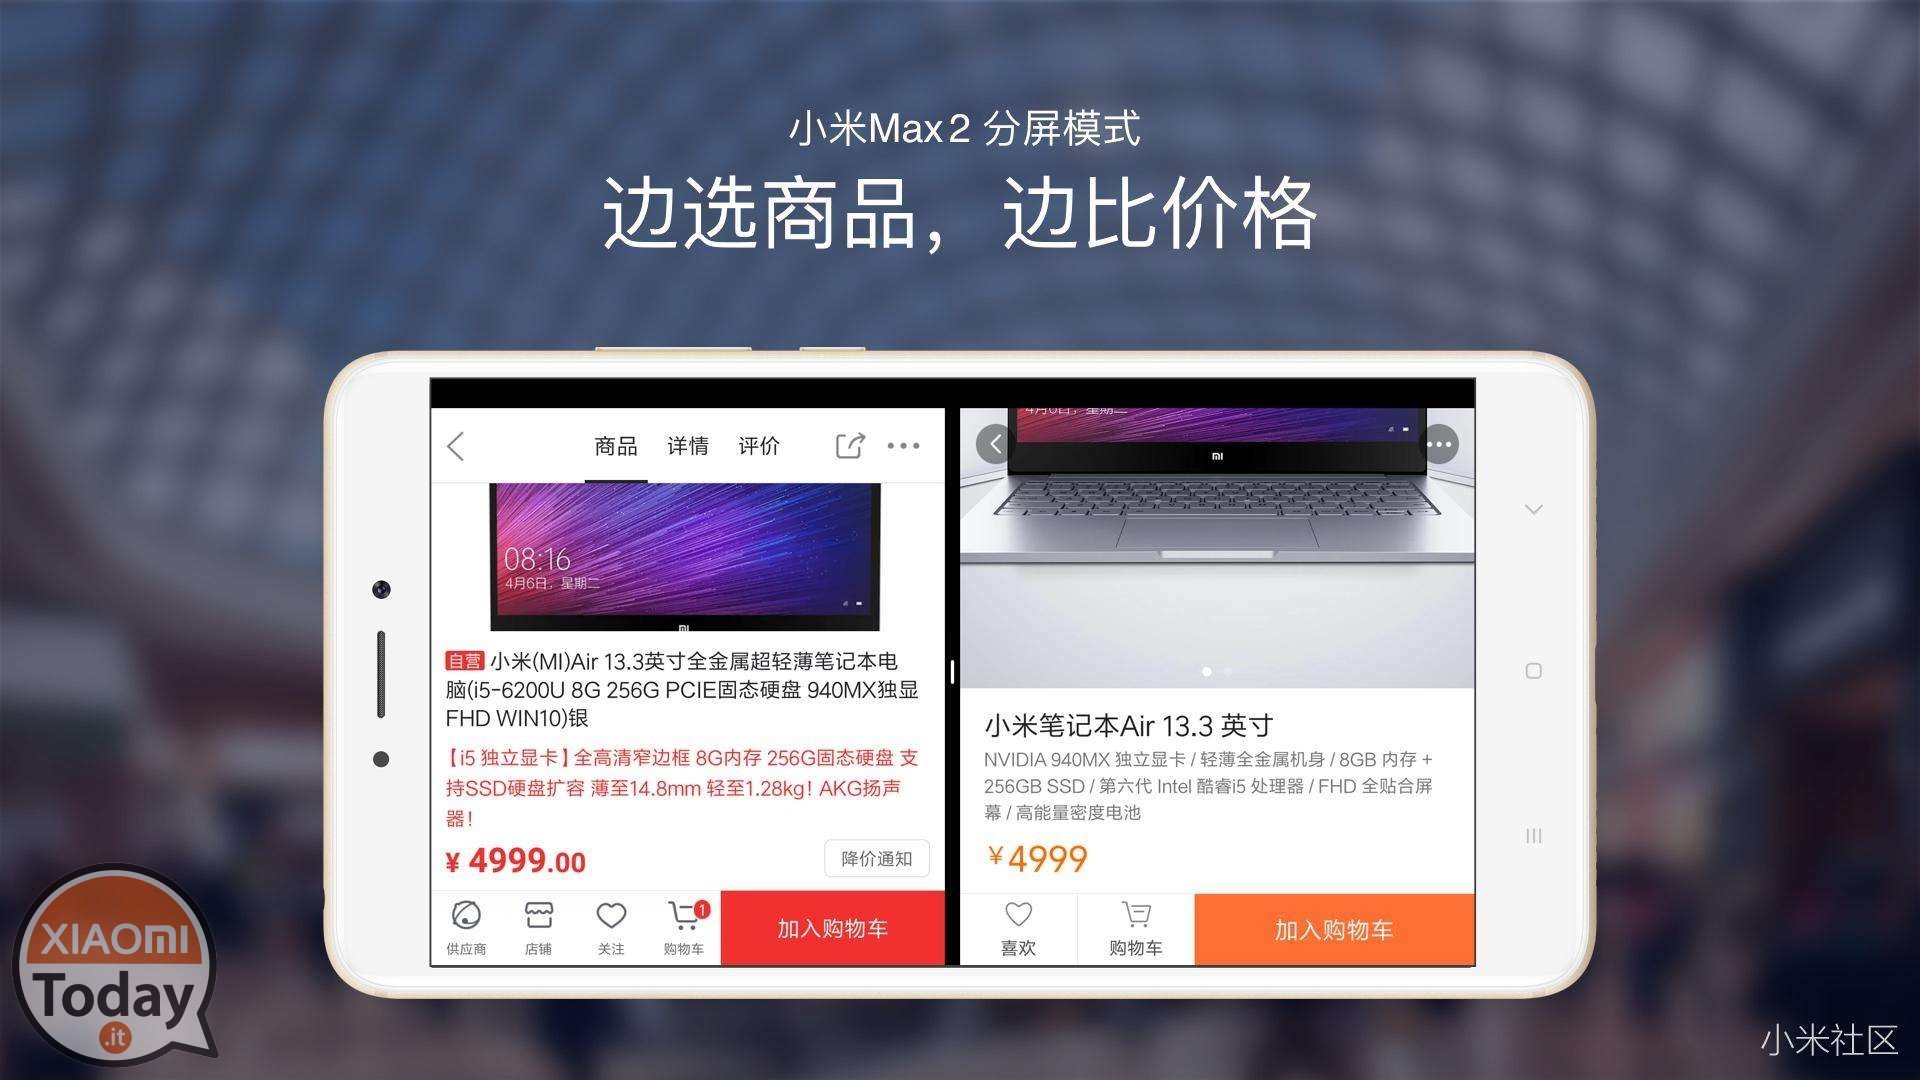 Xiaomi-Mi-Max-2-MIUI-8-Split-Screen-Feature